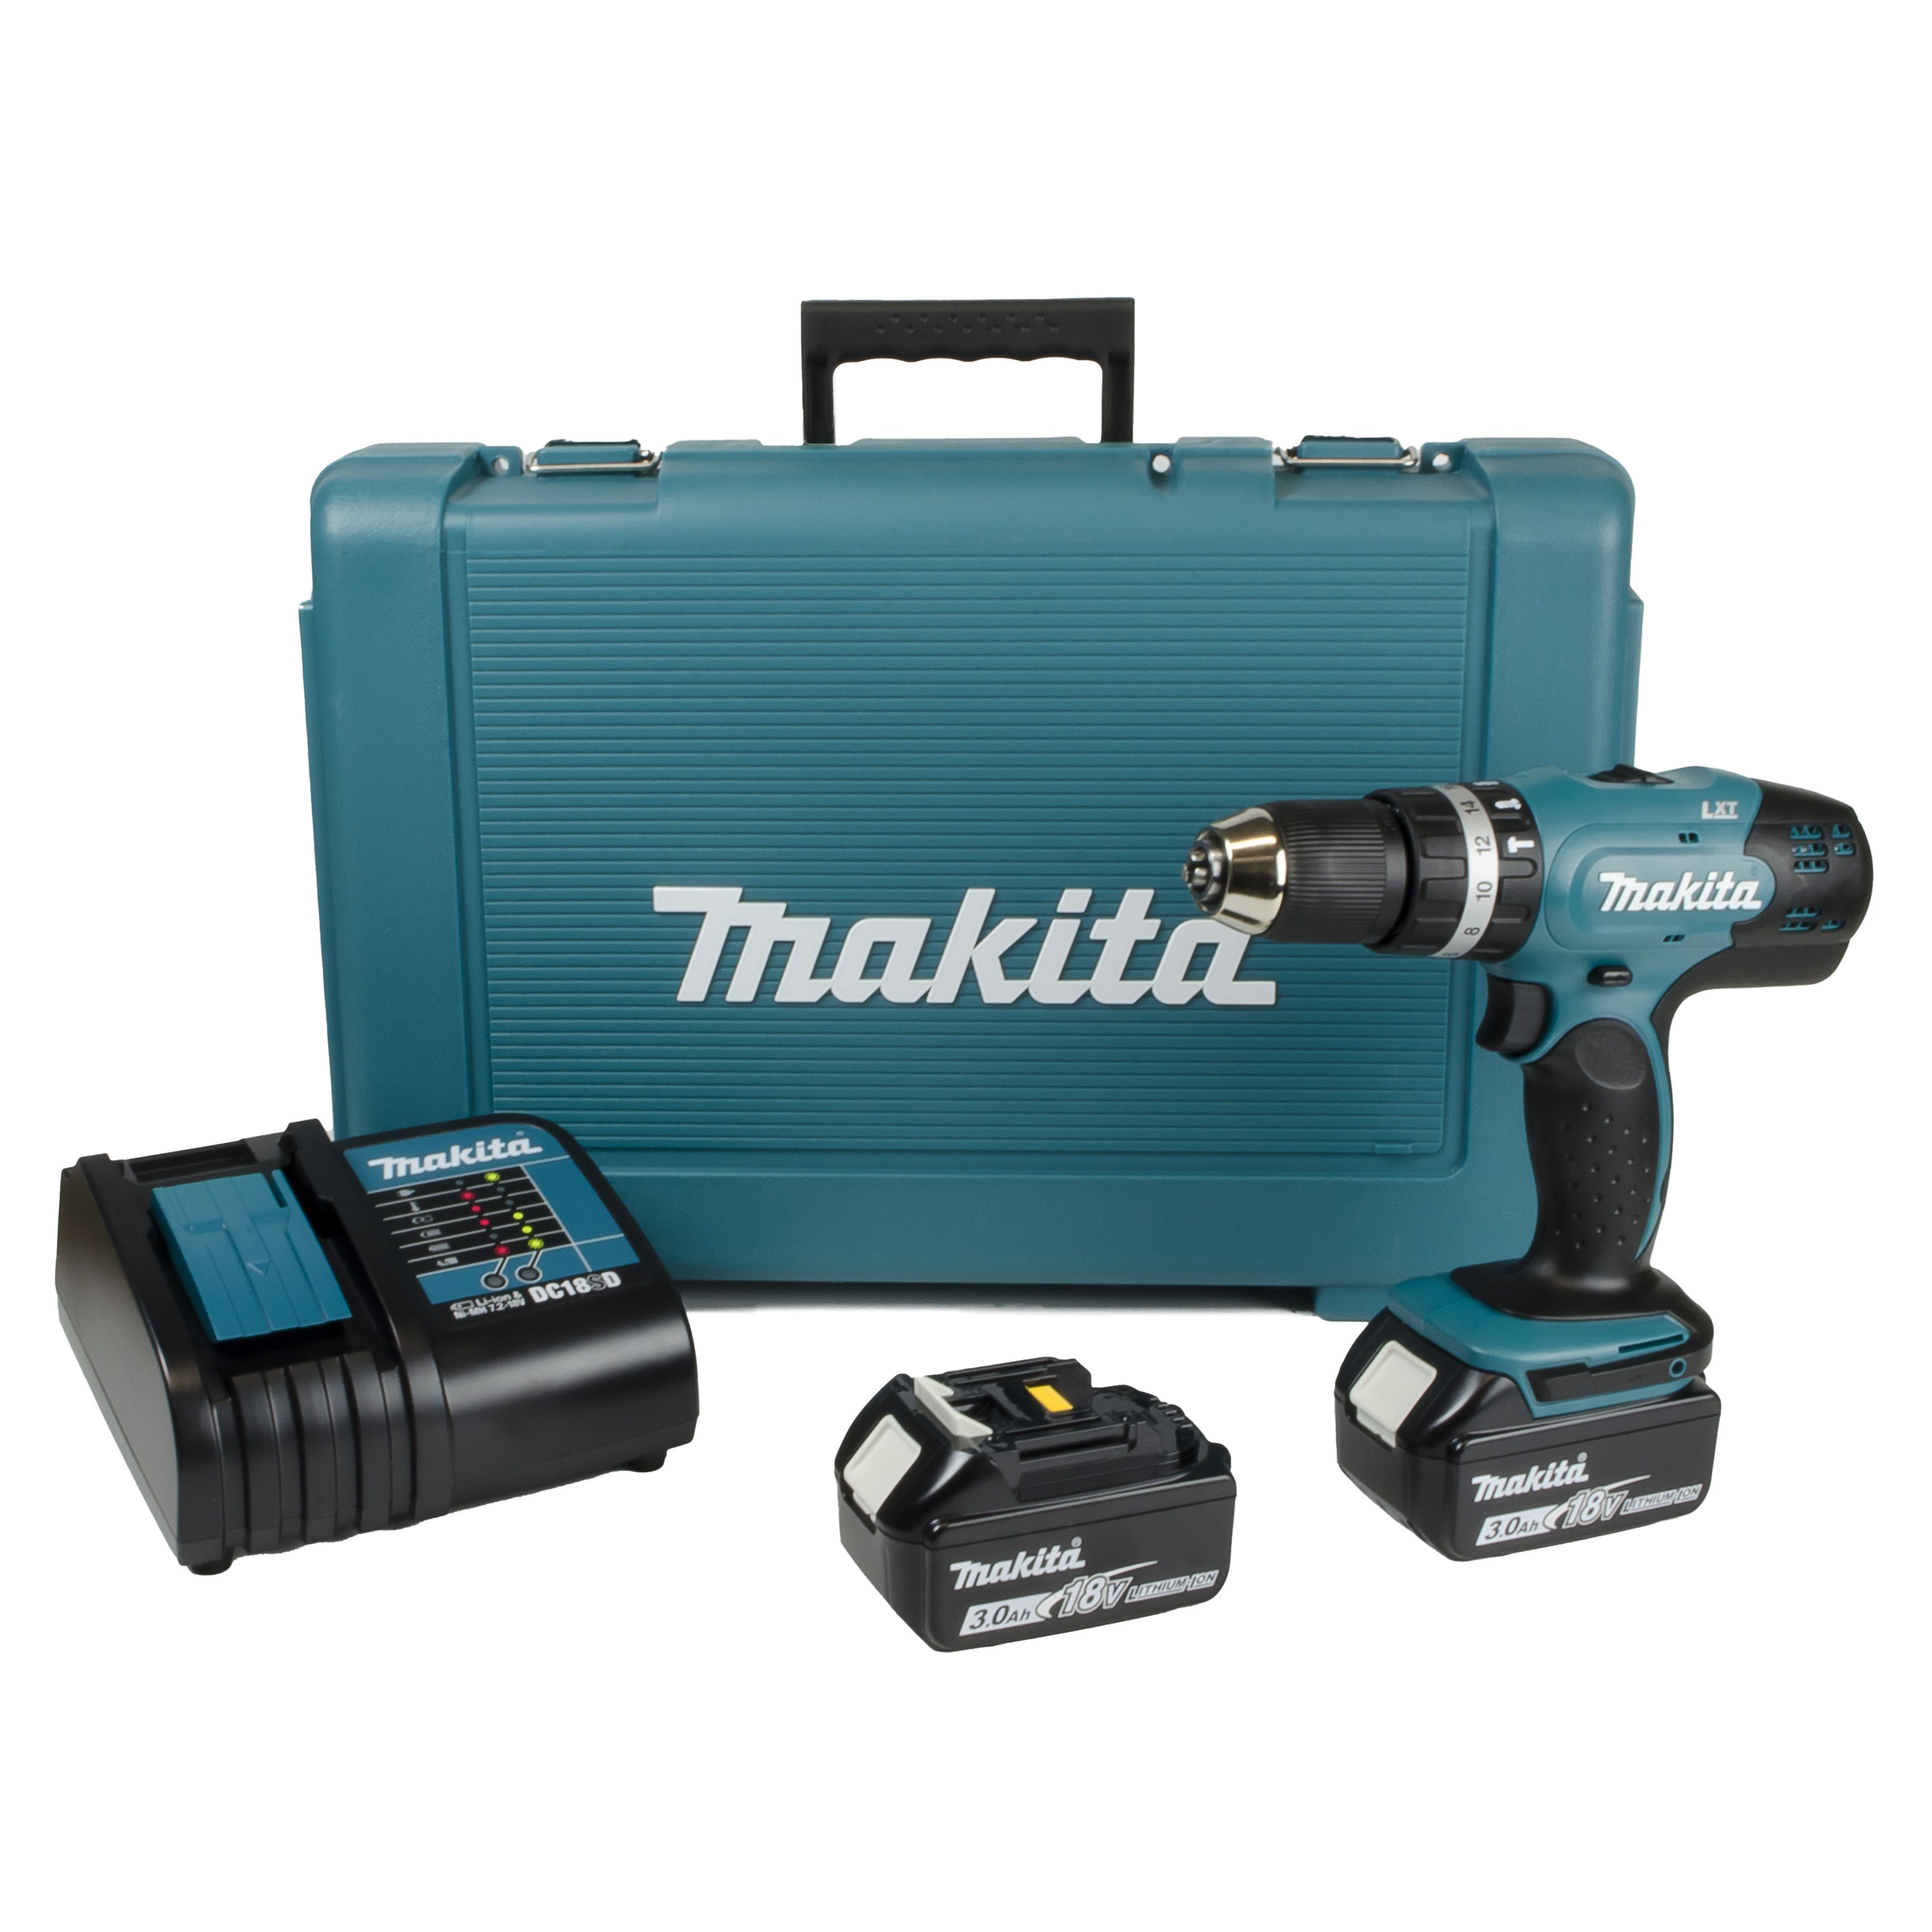 Makita 18V Li-ion Brushed Cordless Combi drill (2 x 3Ah